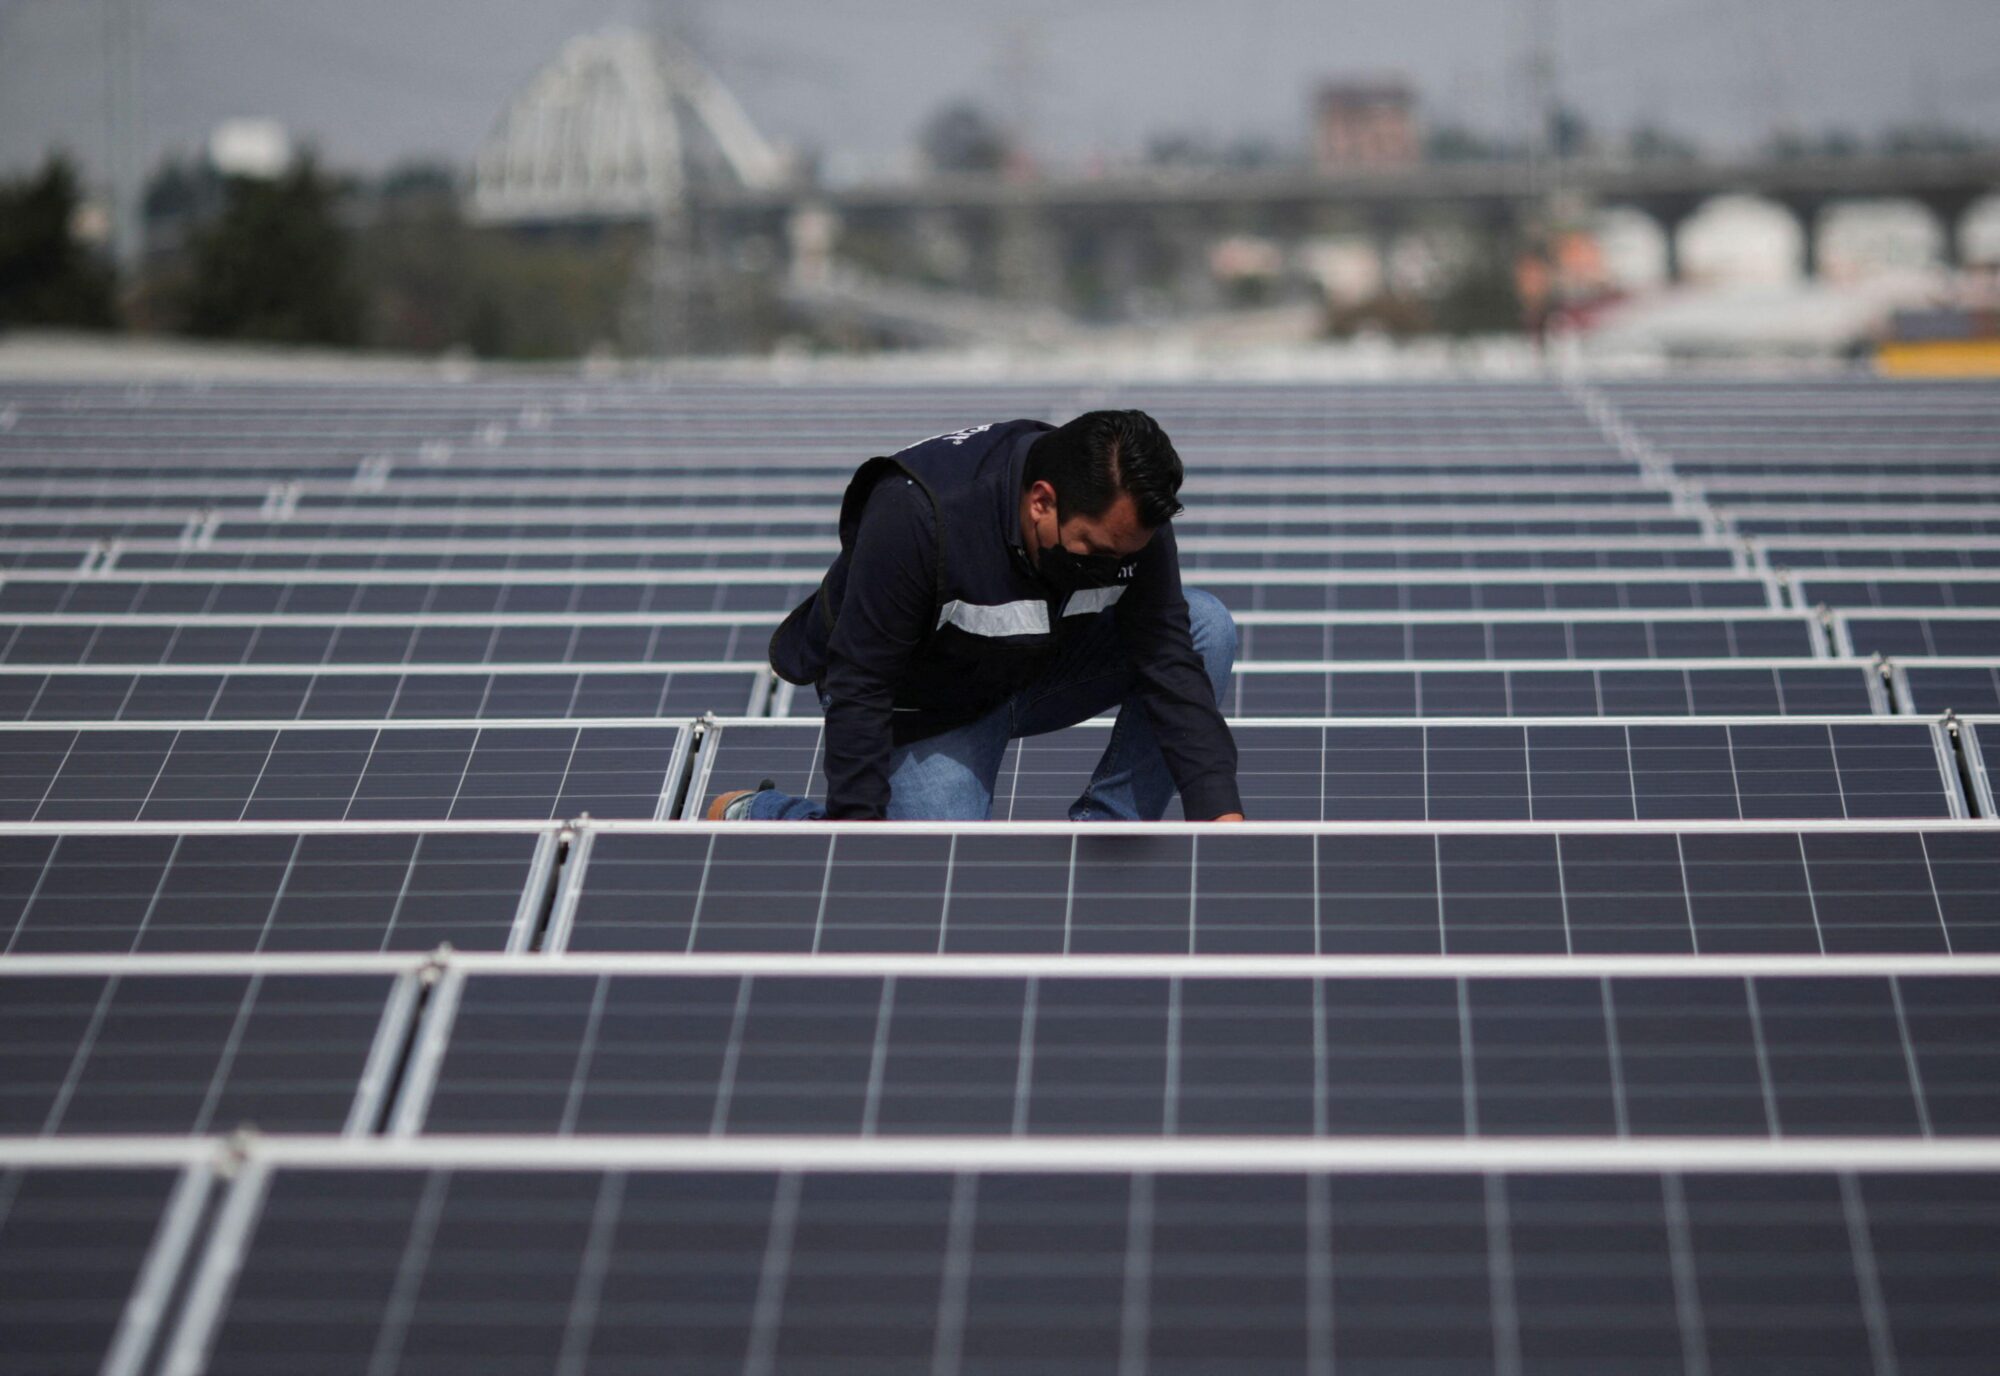 A worker installs a solar panel